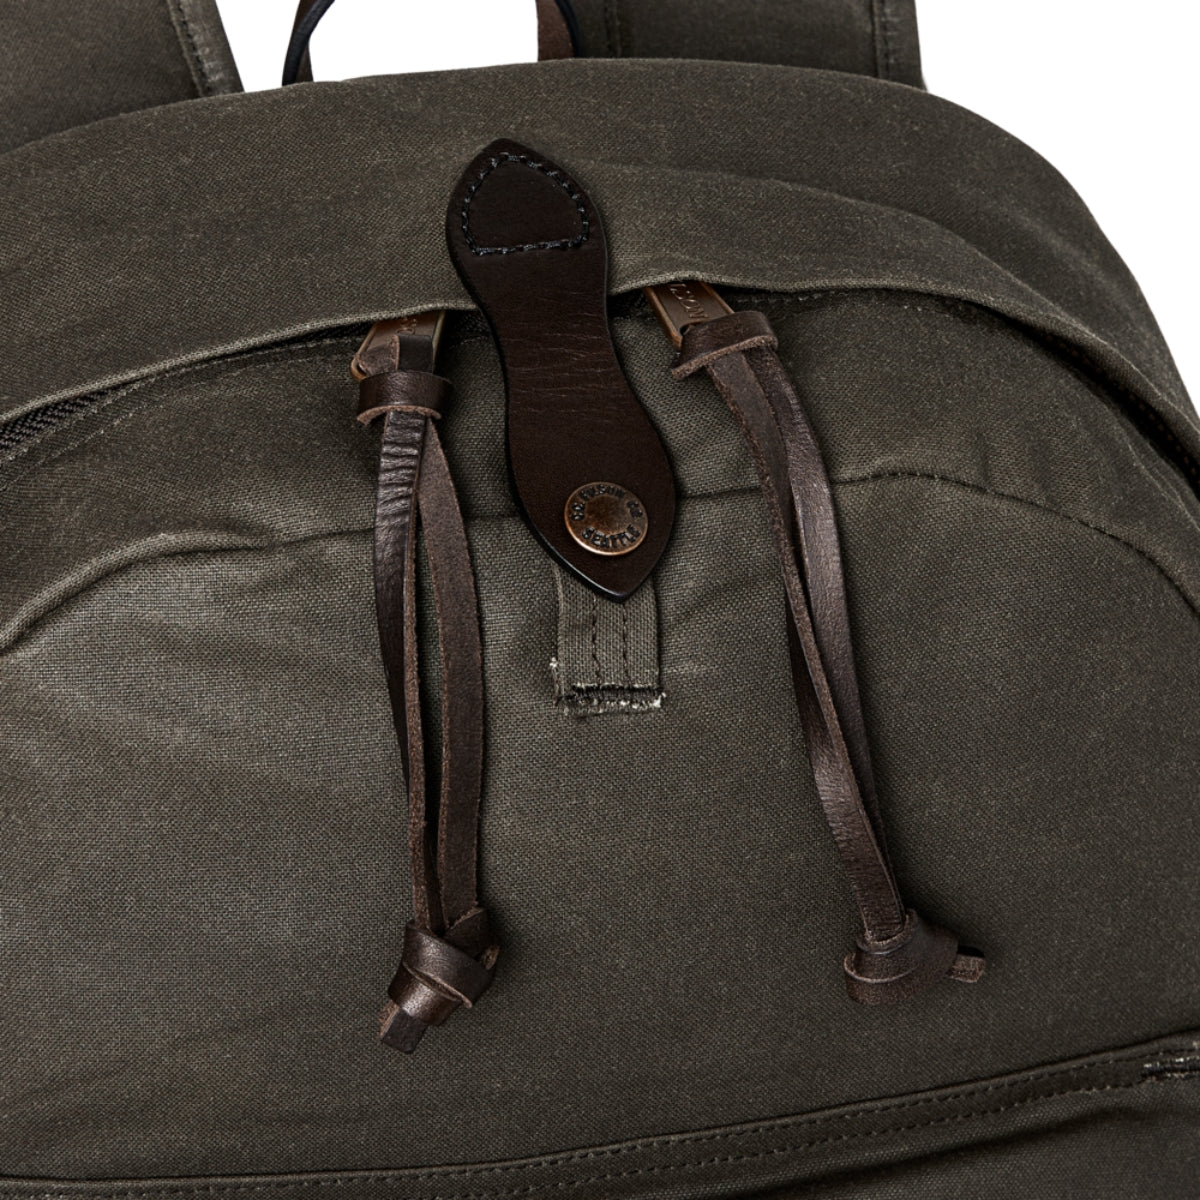 Filson Journeyman Backpack in Ottergreen